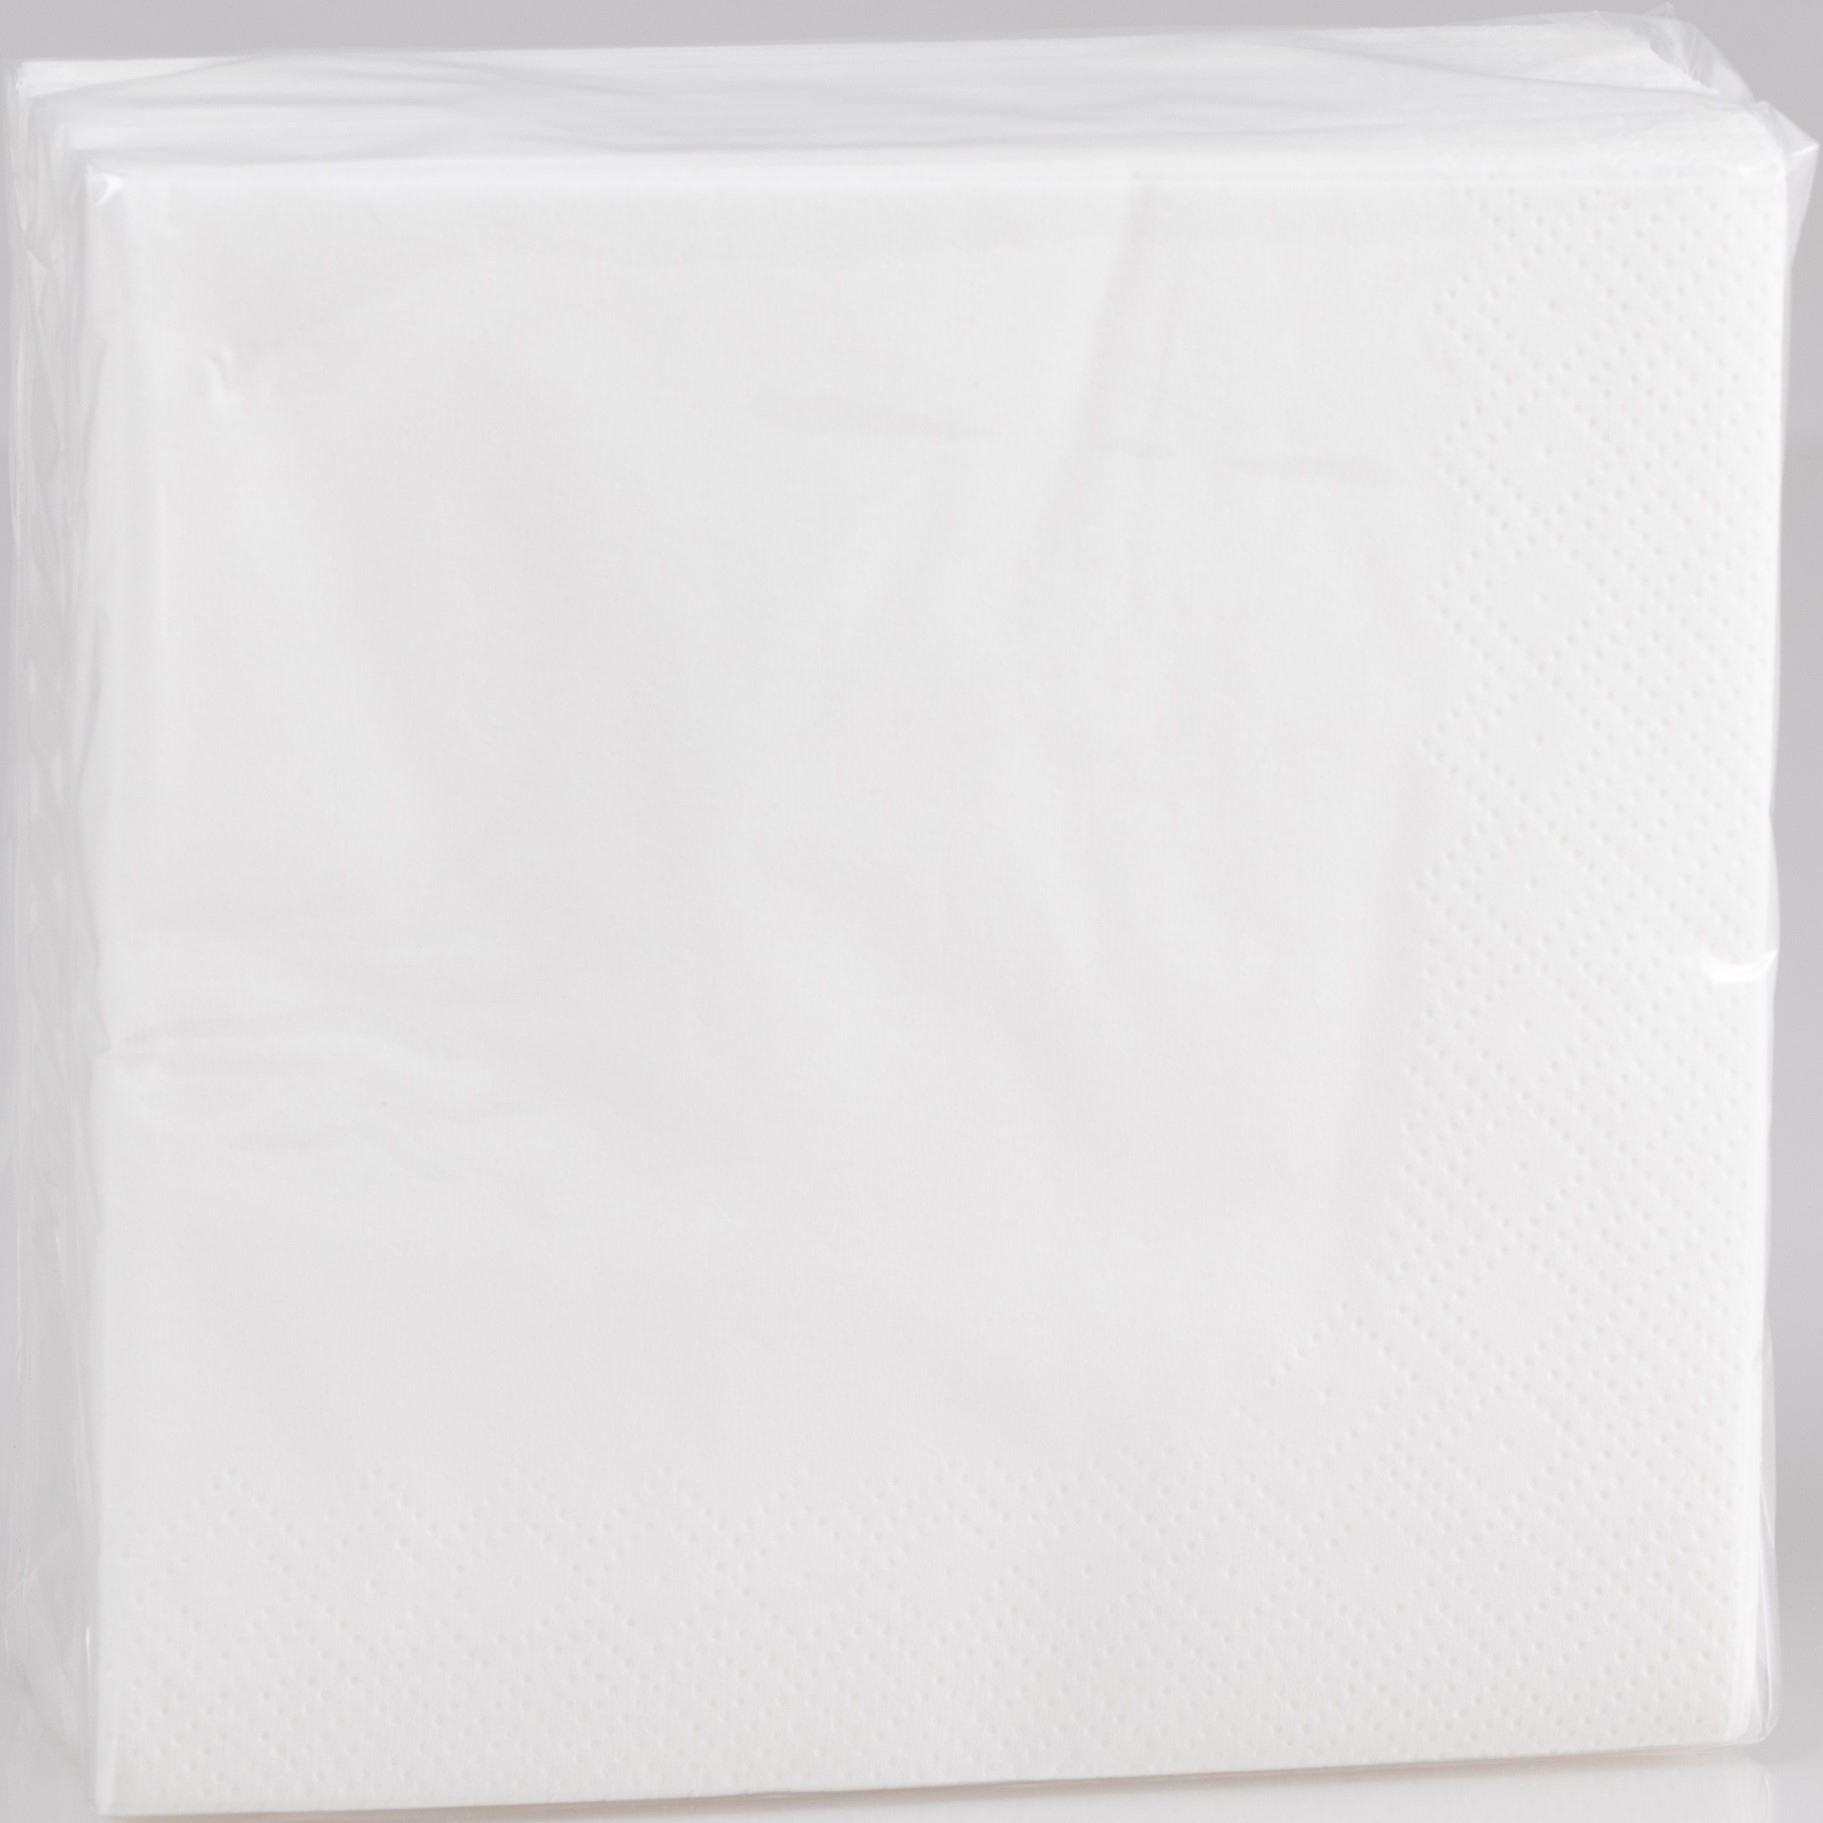 ELCO Serviettes tissue 40x40cm 43404001-001 3 plis, blanc 50pcs.